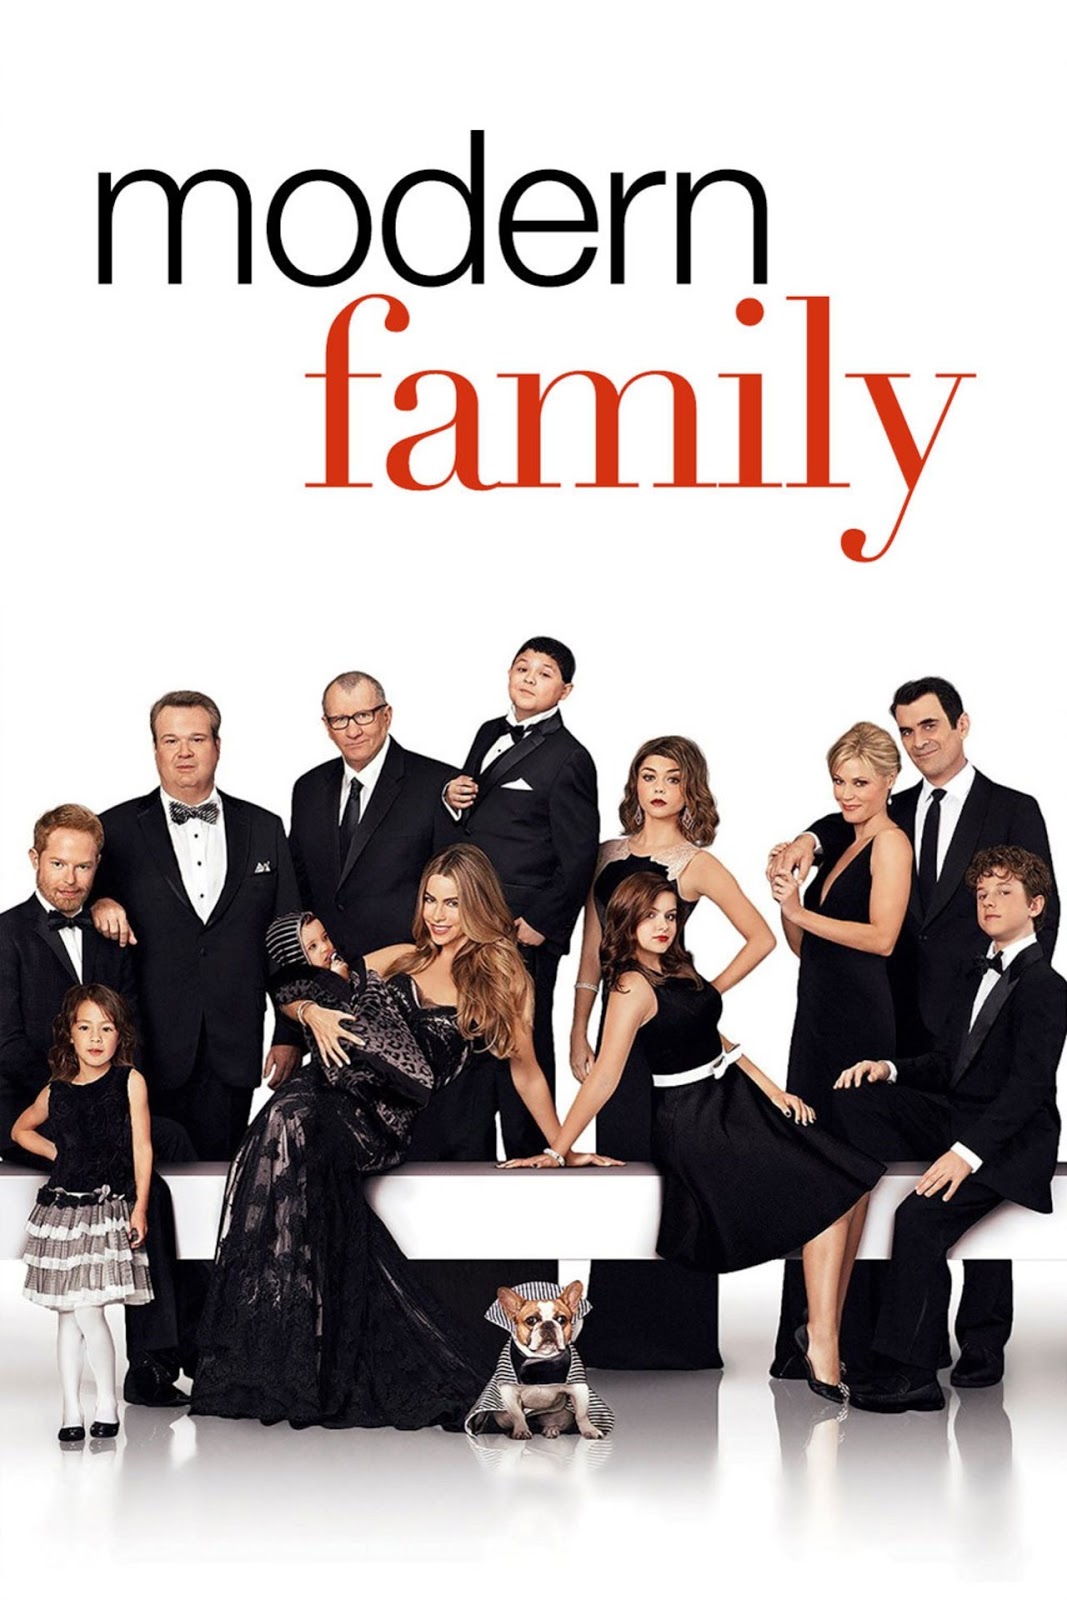 Modern Family 2015: Season 7